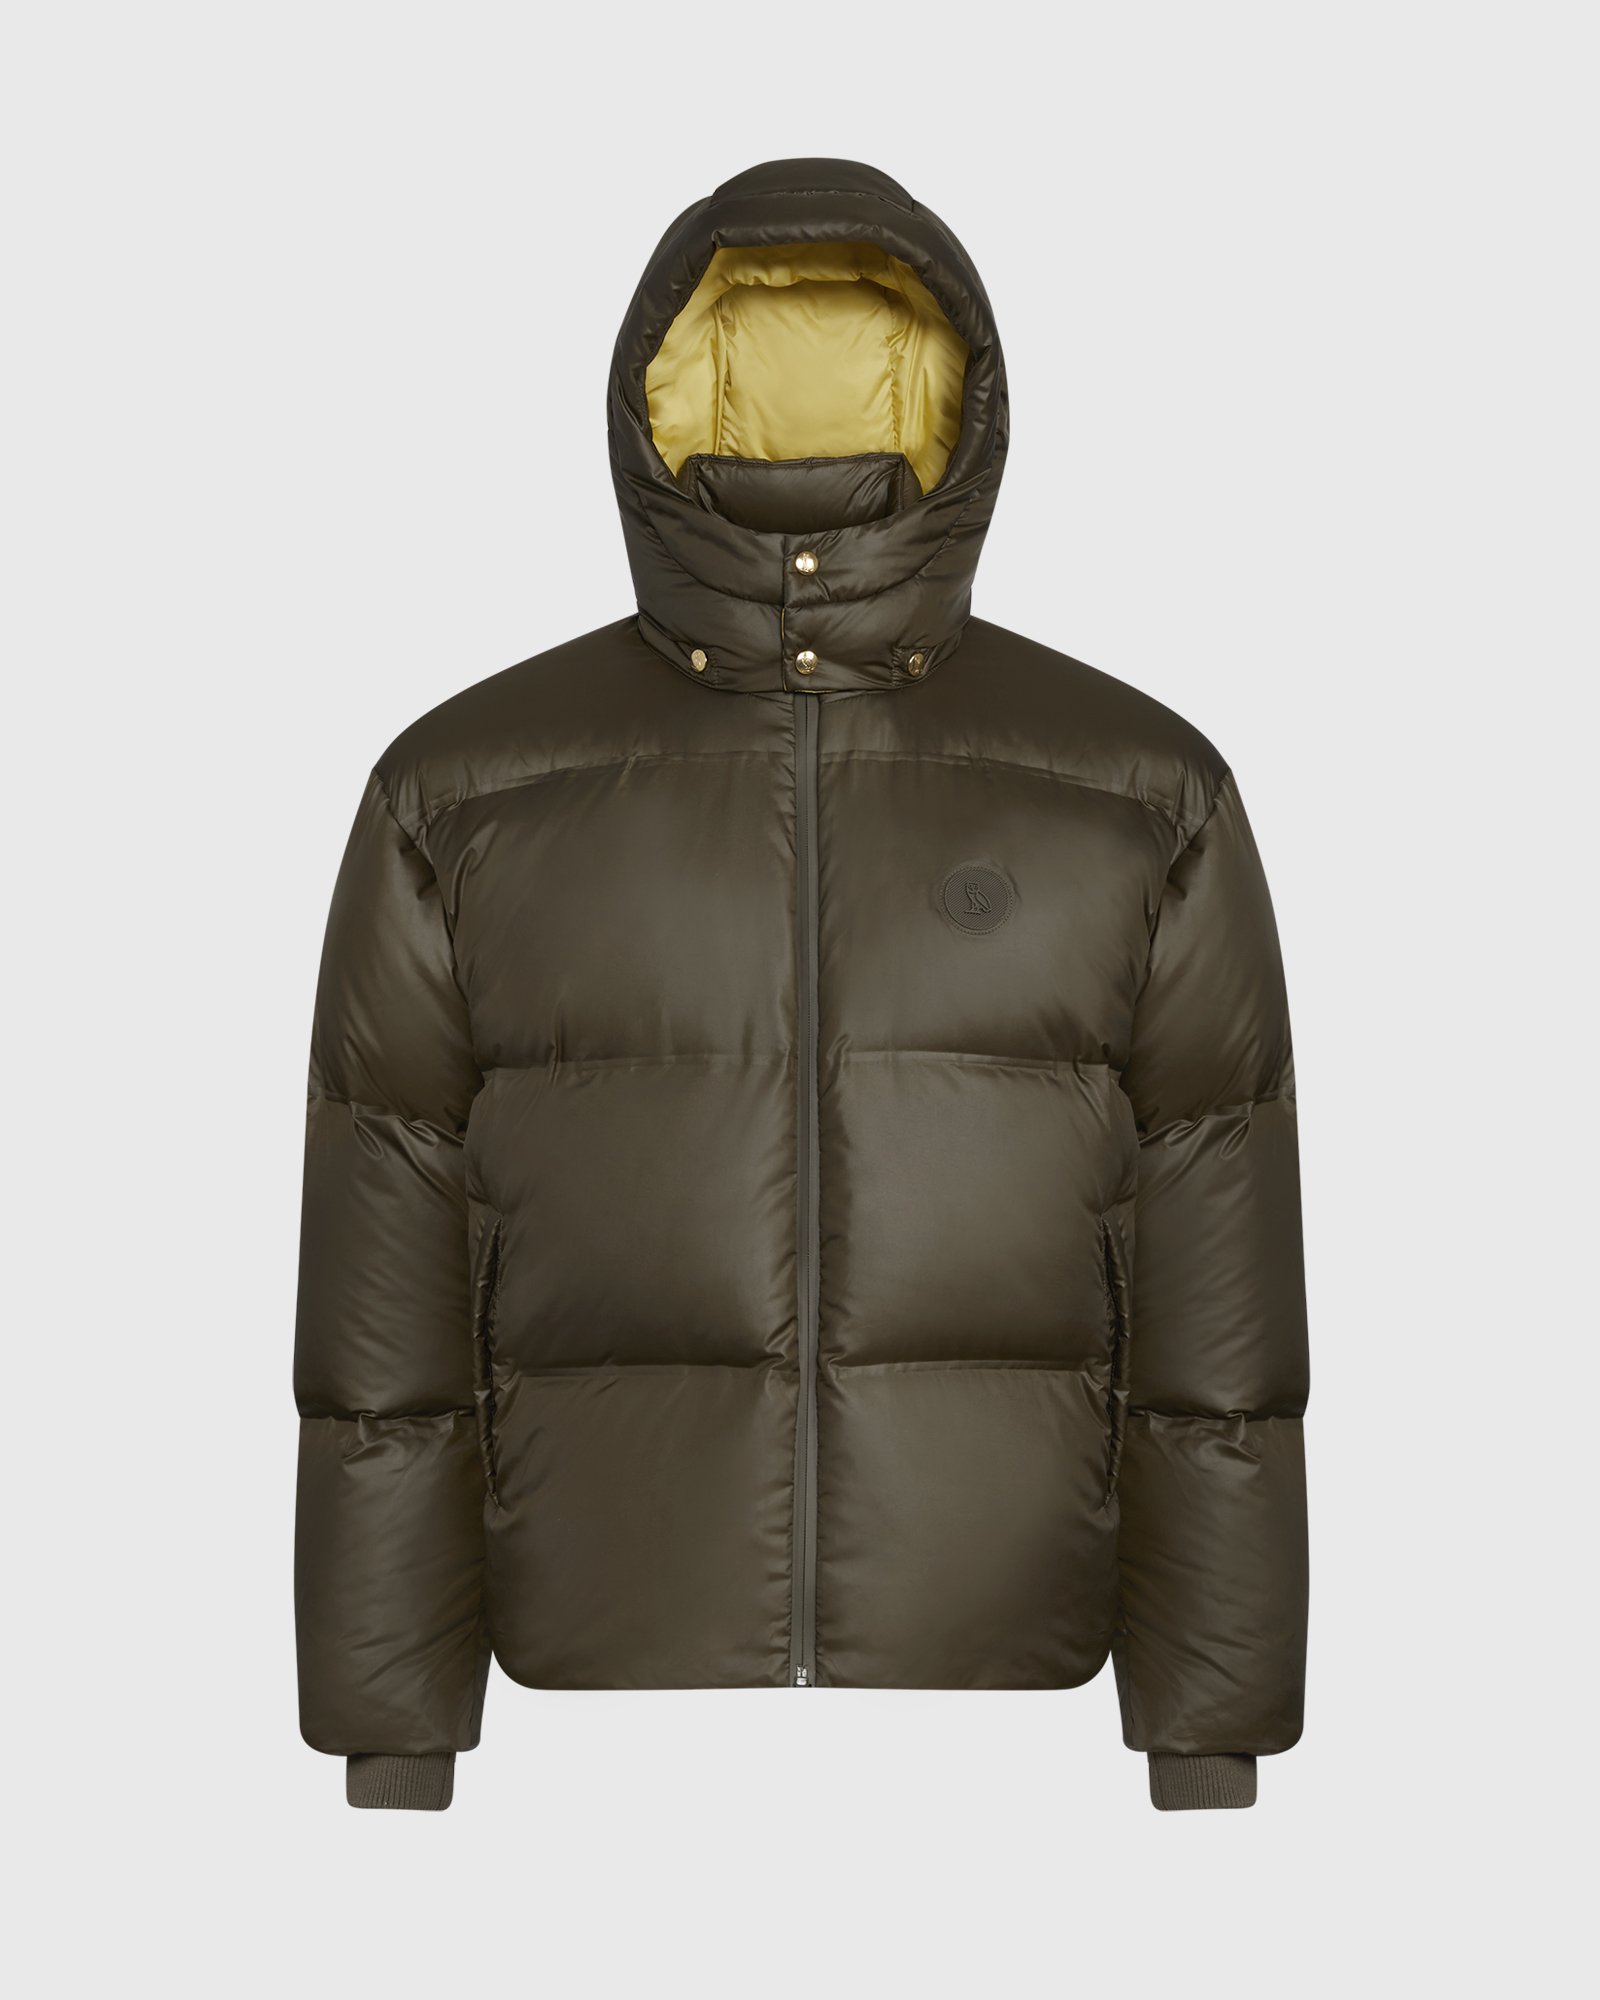 OVO-bounce-jacket-brown-1.jpg